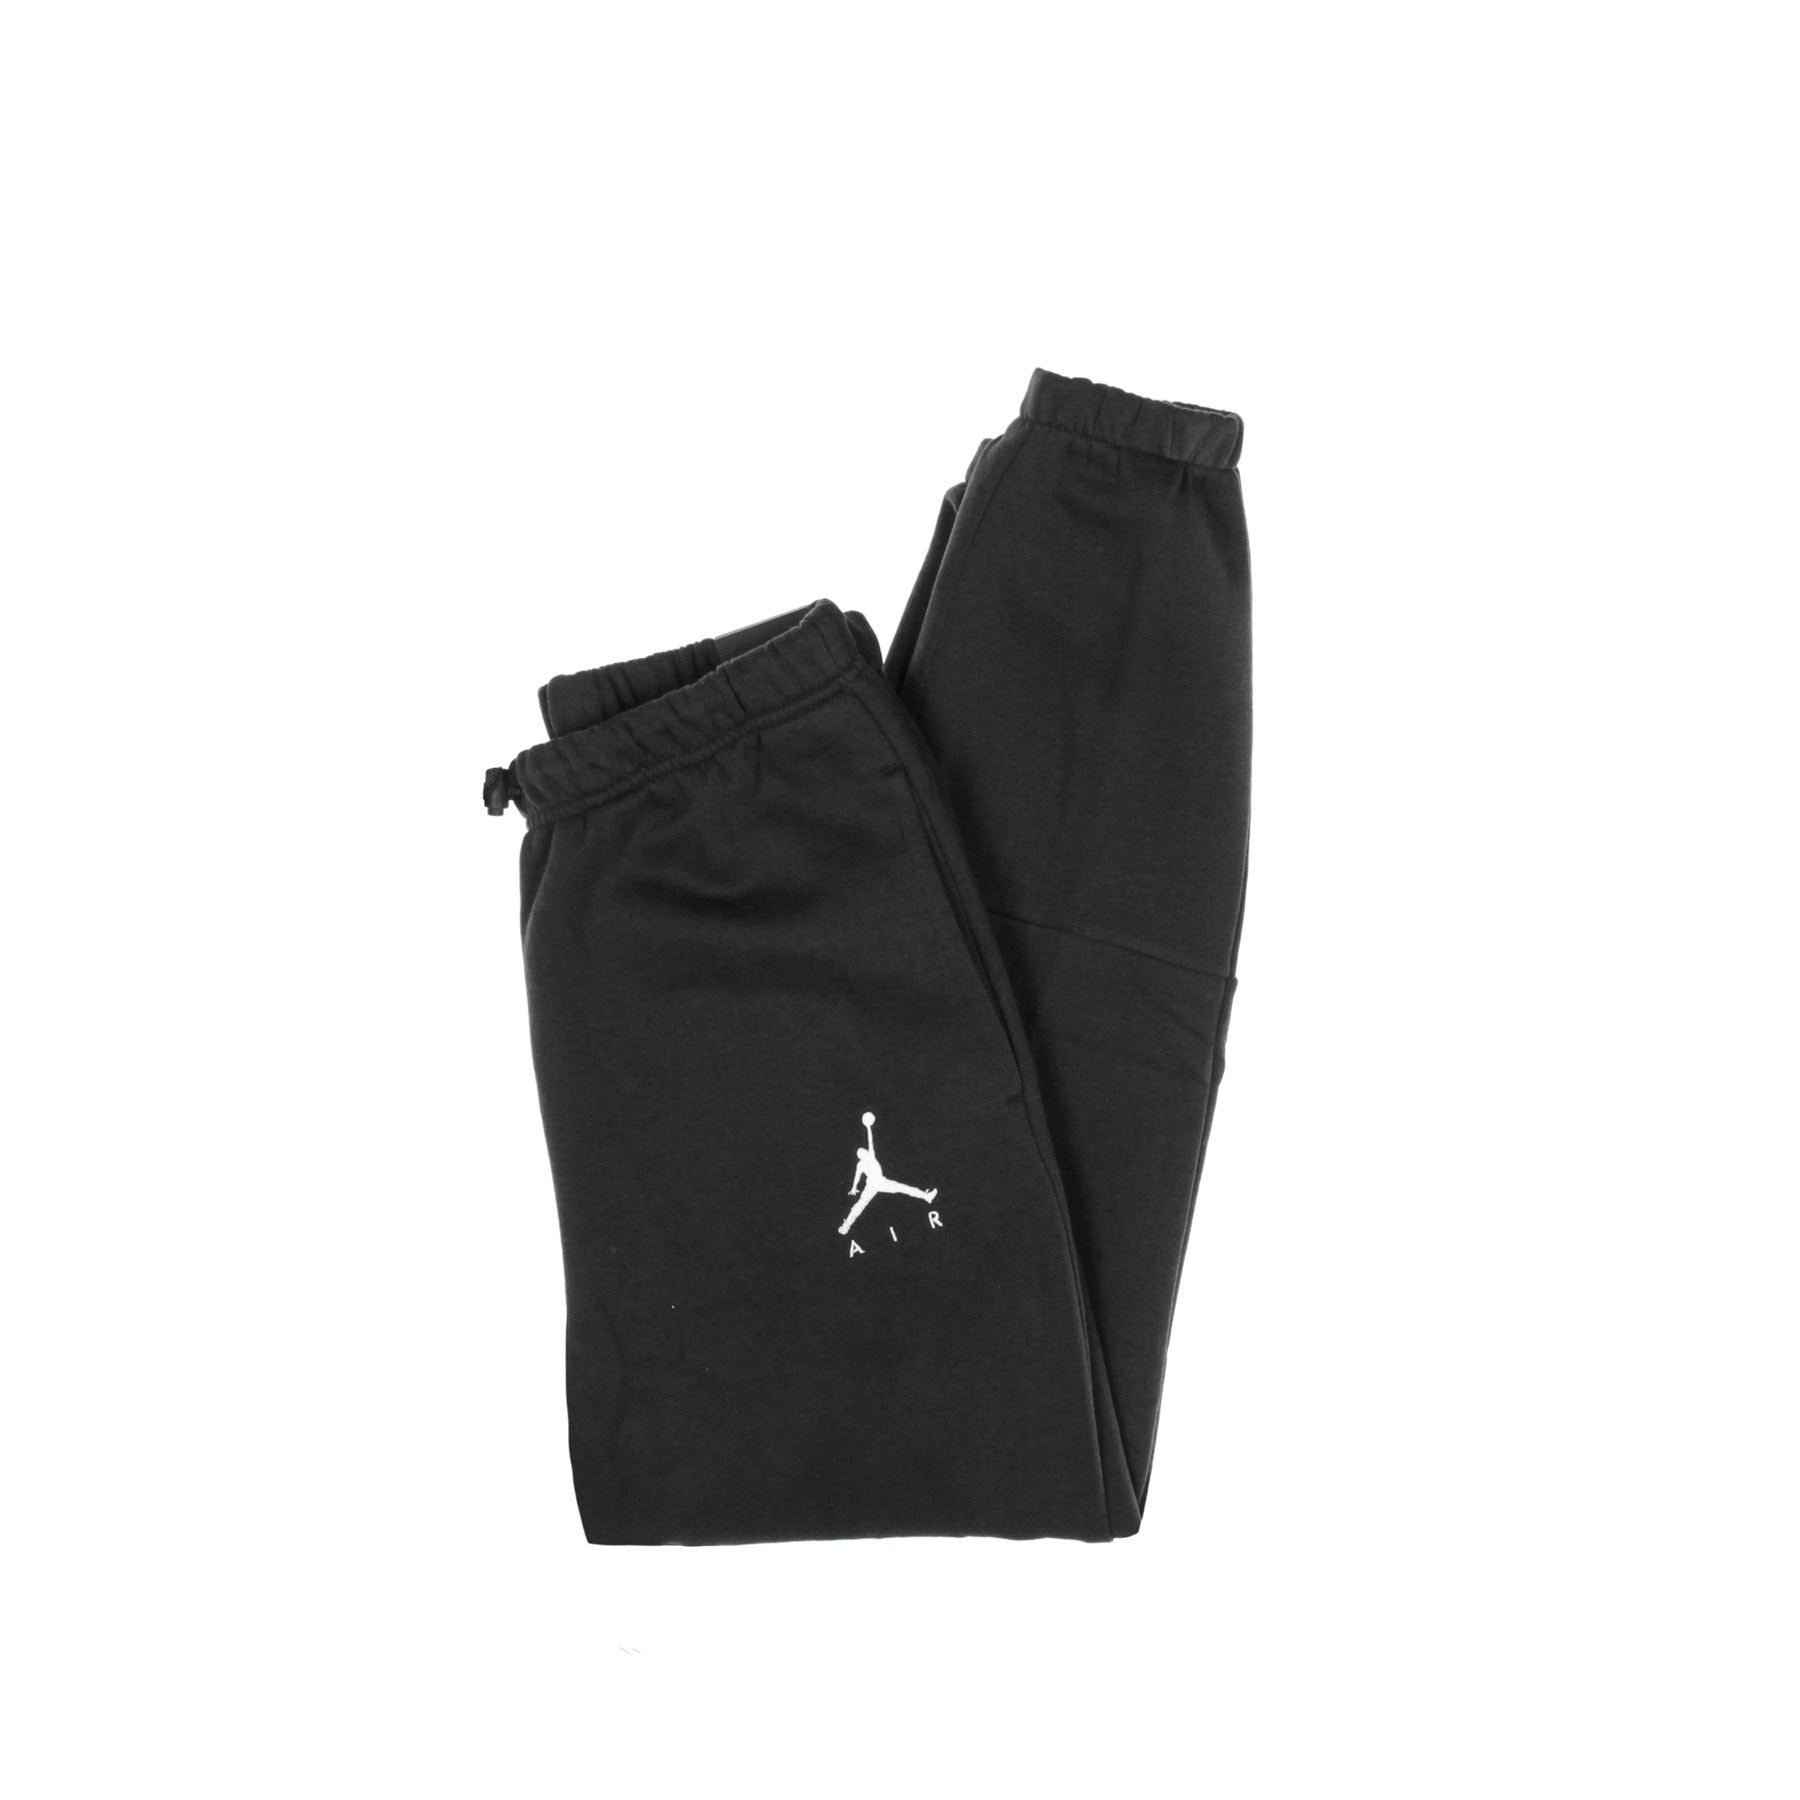 Jumpman Air Fleece Men's Fleece Tracksuit Pants Black/black/black/white